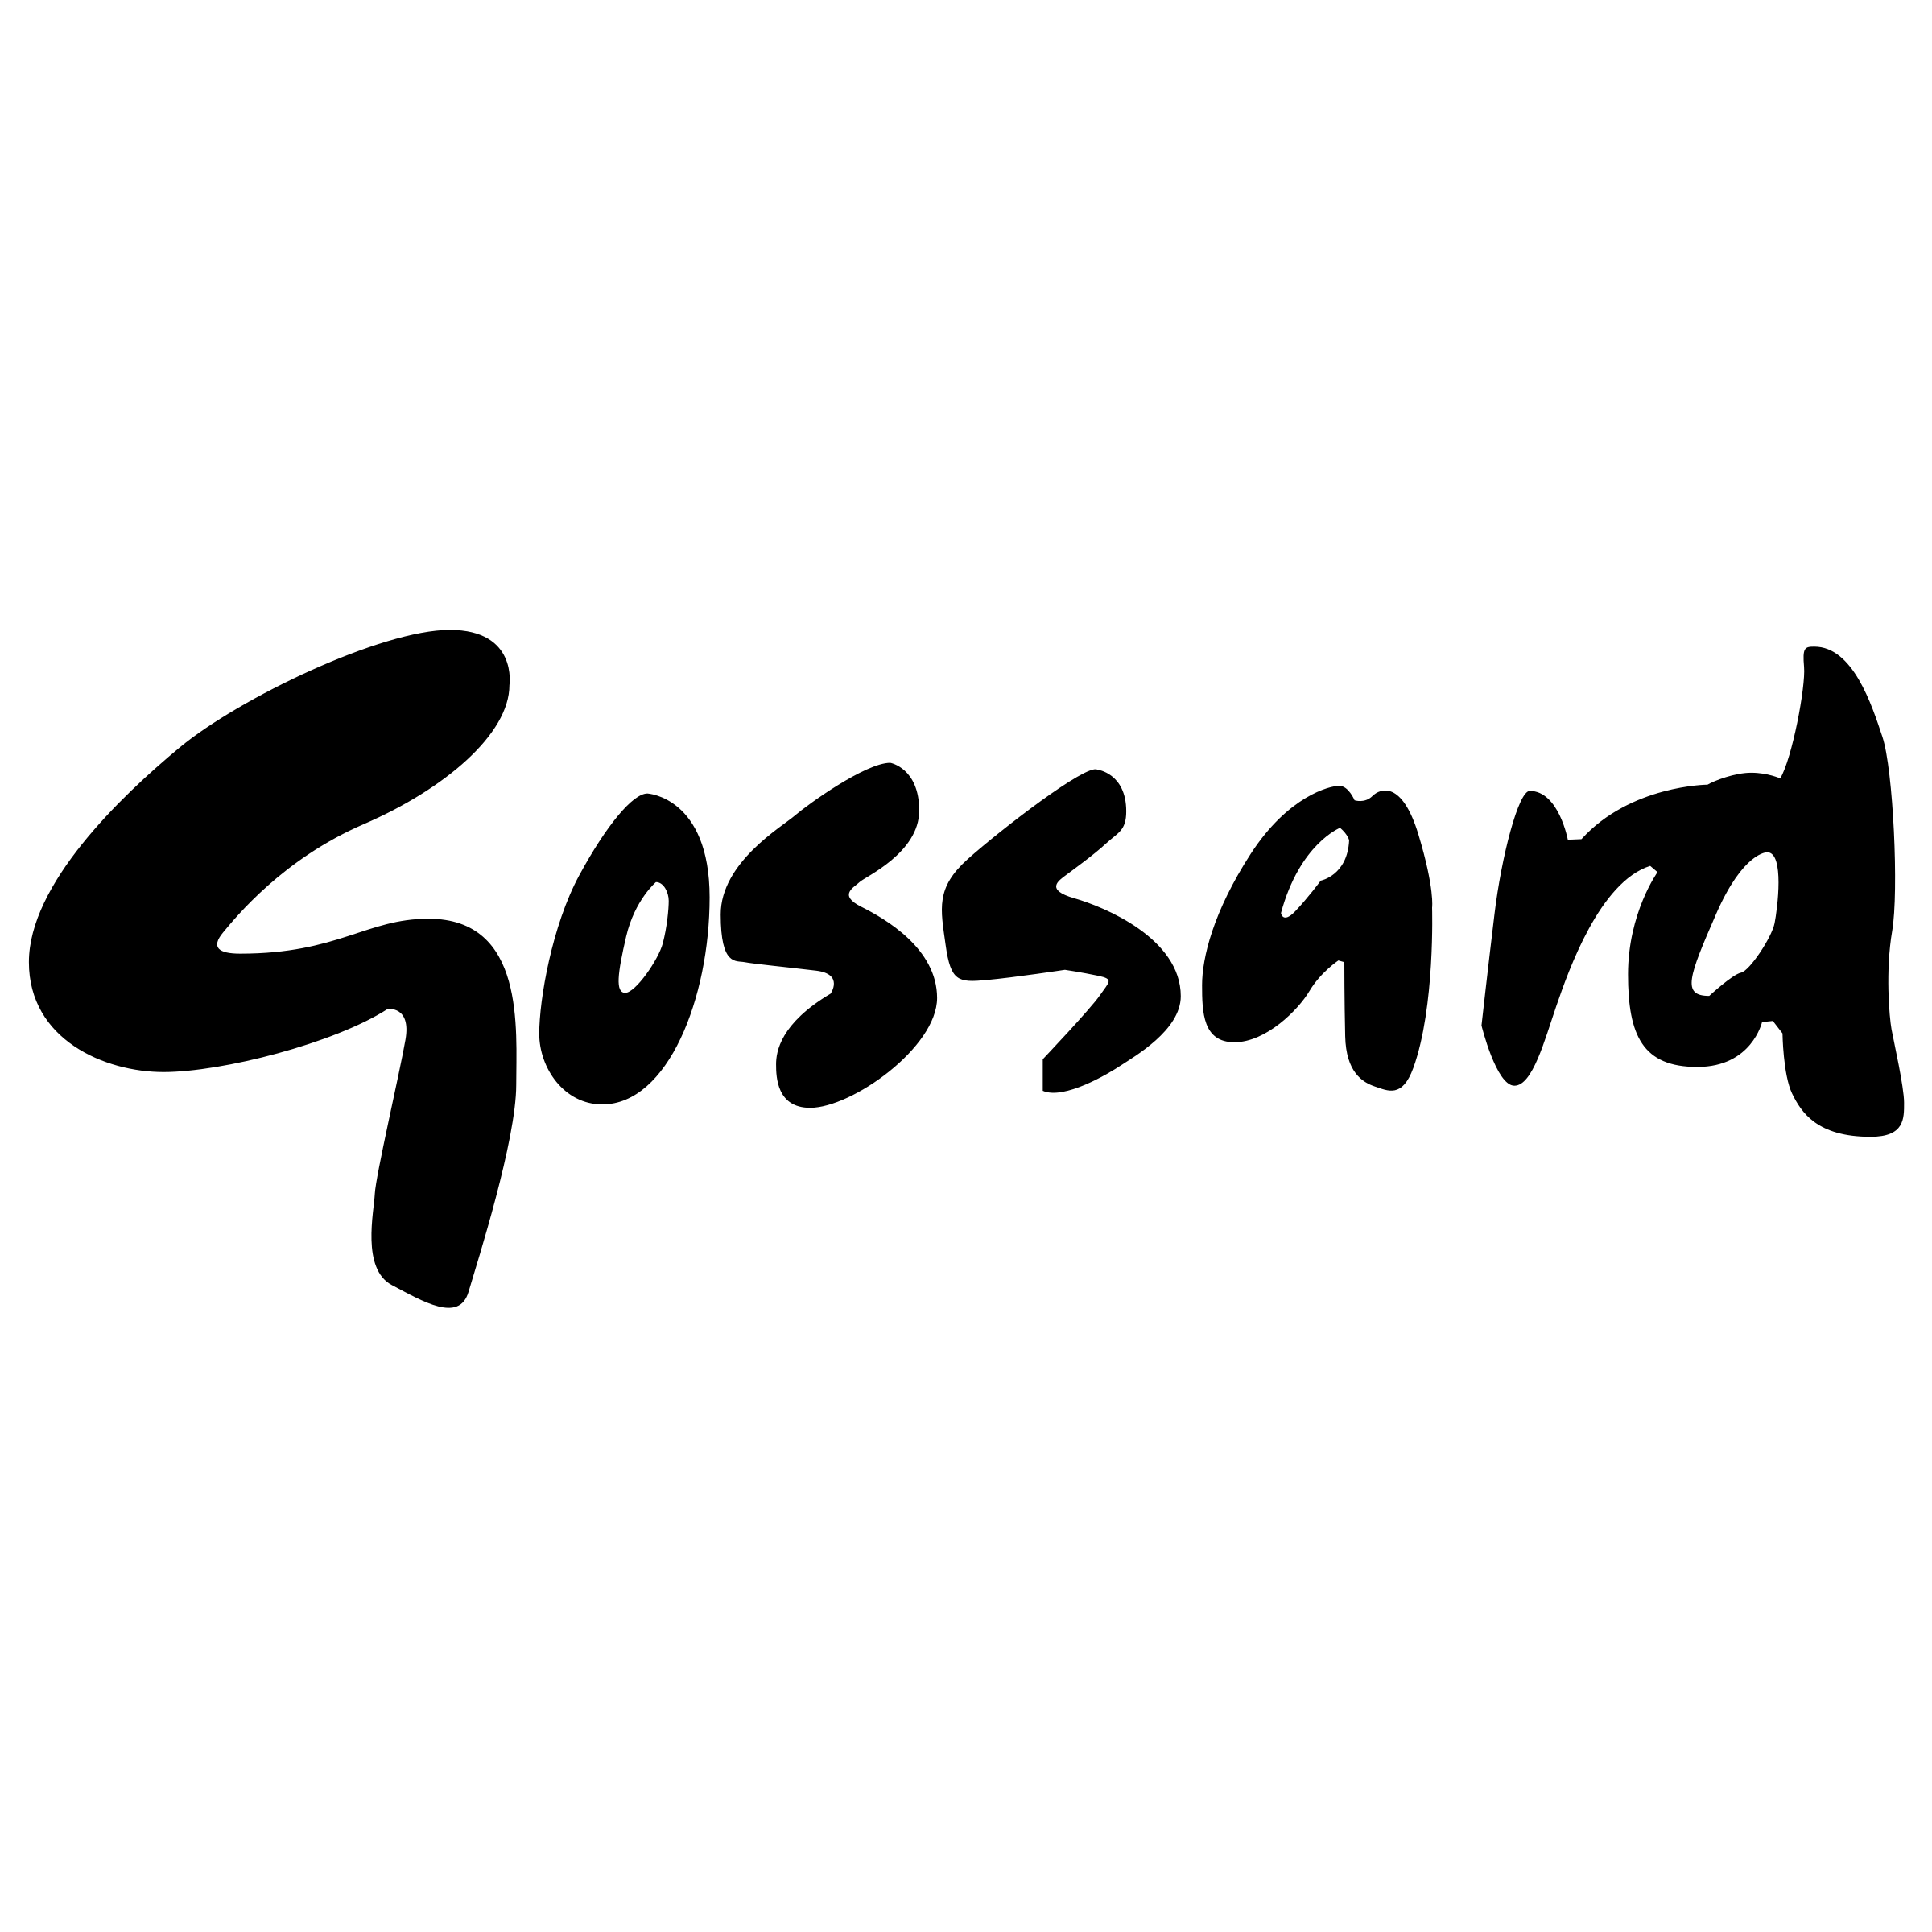 Gossard - FairBrowse